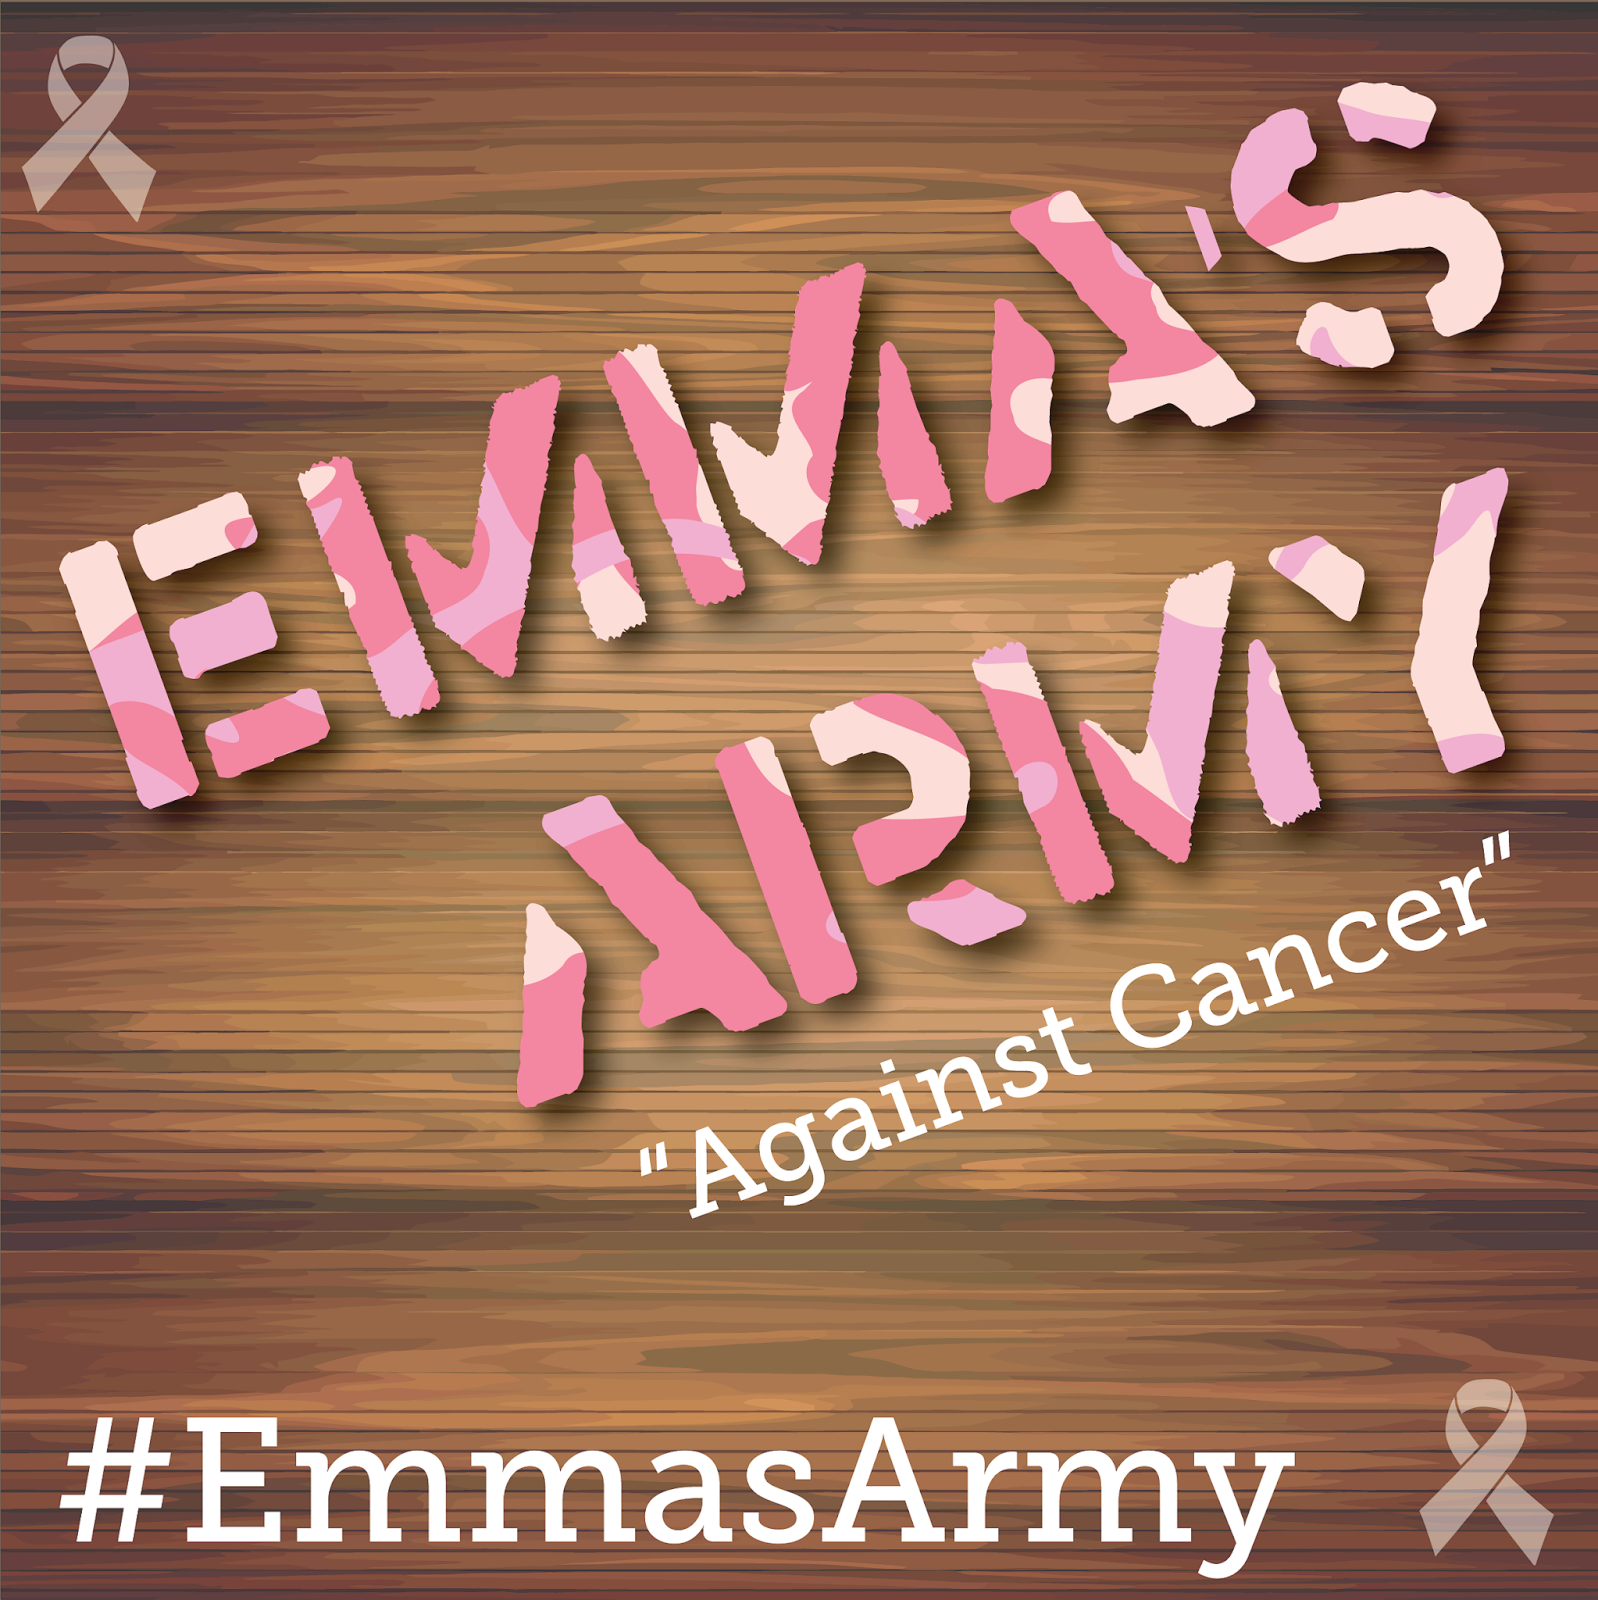 emmas army fight against cancer